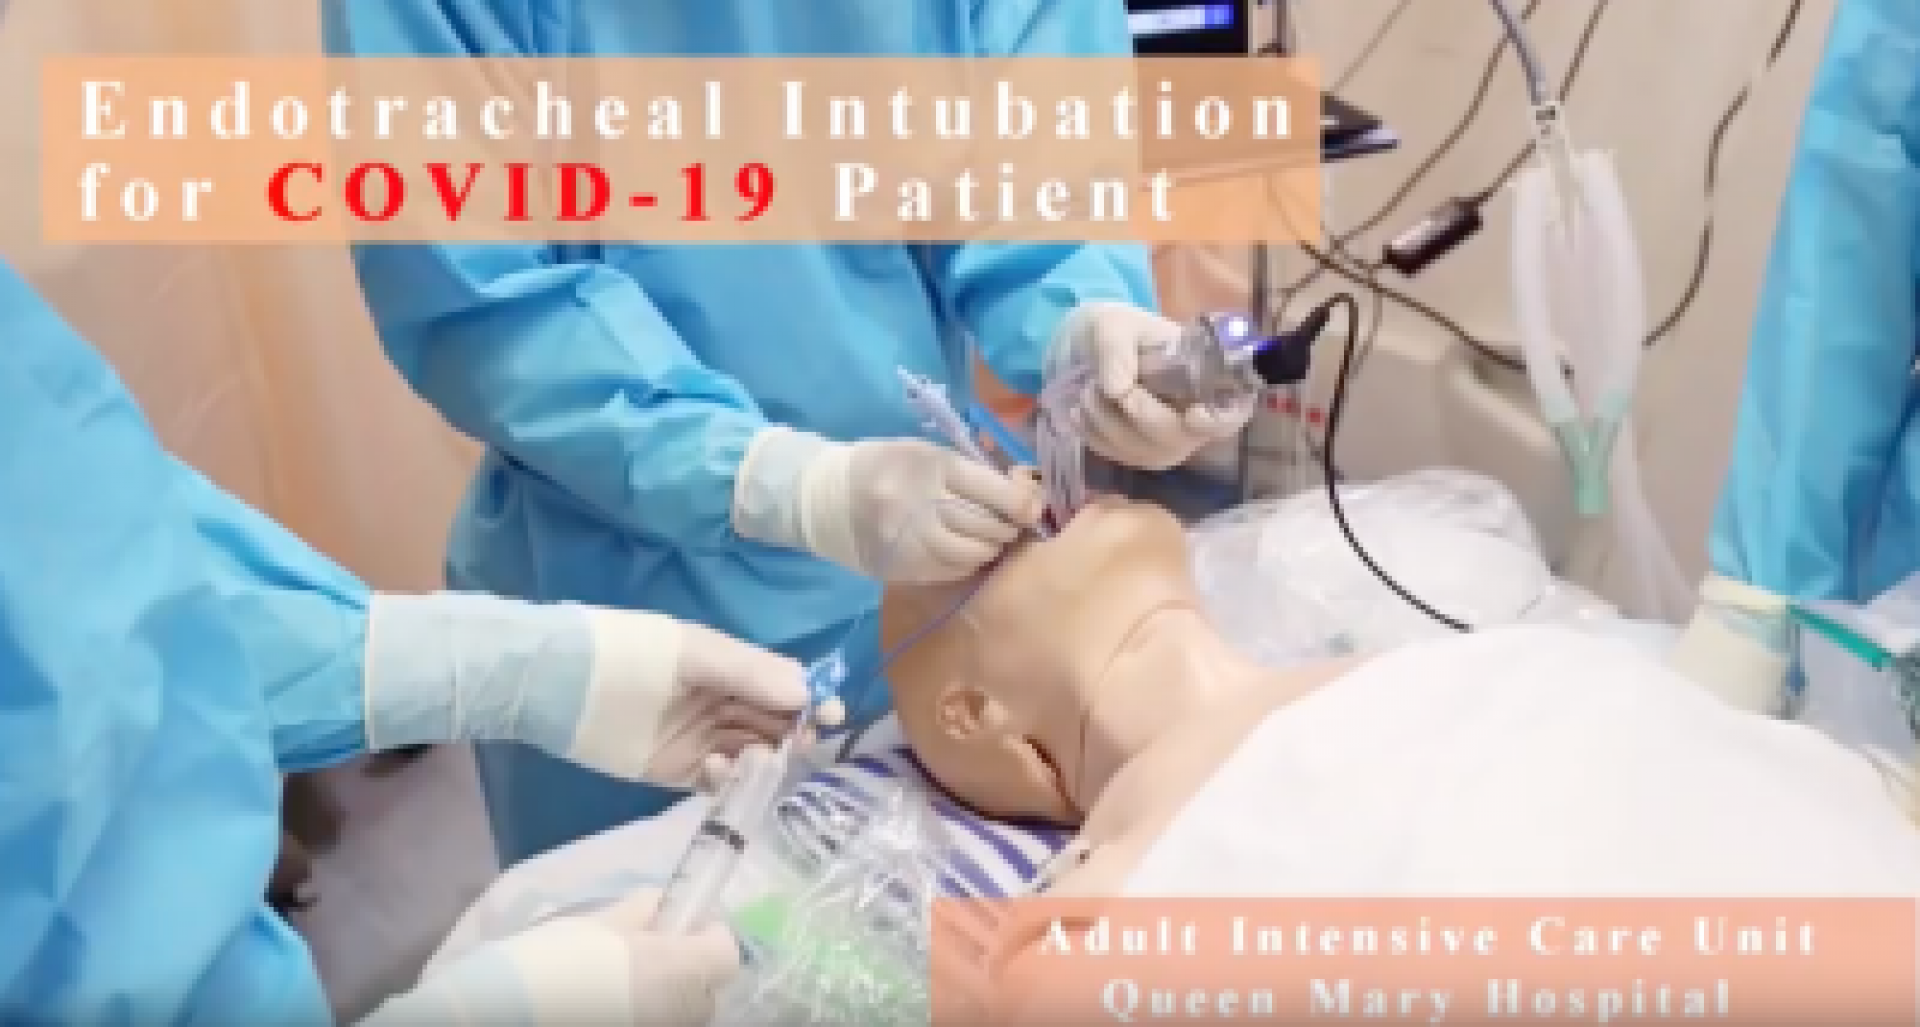 Endotracheal intubation in Covid-19 simulation training